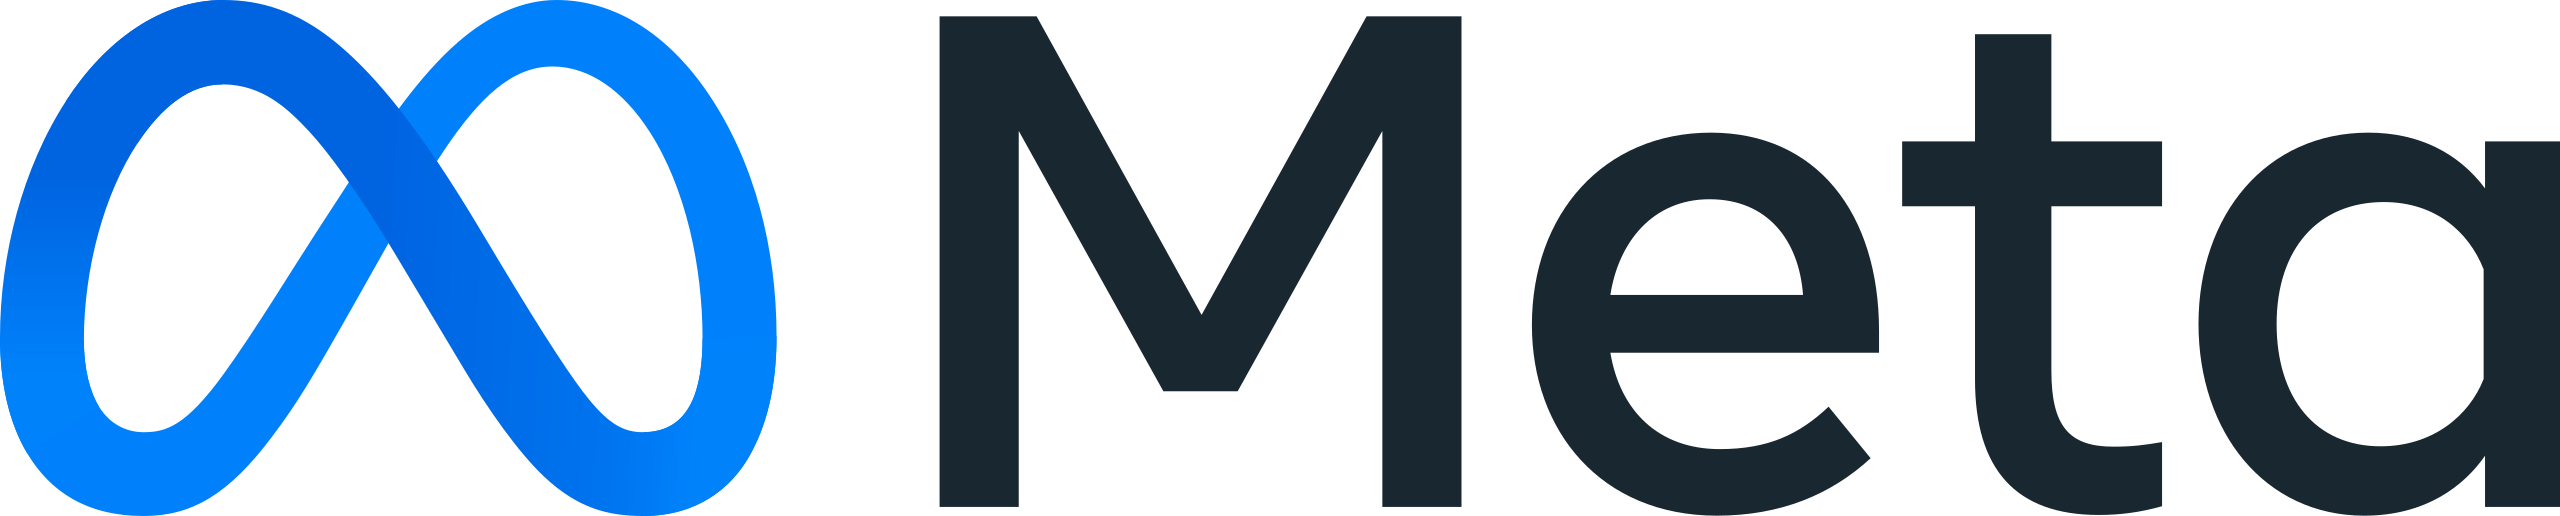 Home Meta Platforms Inc. logo.